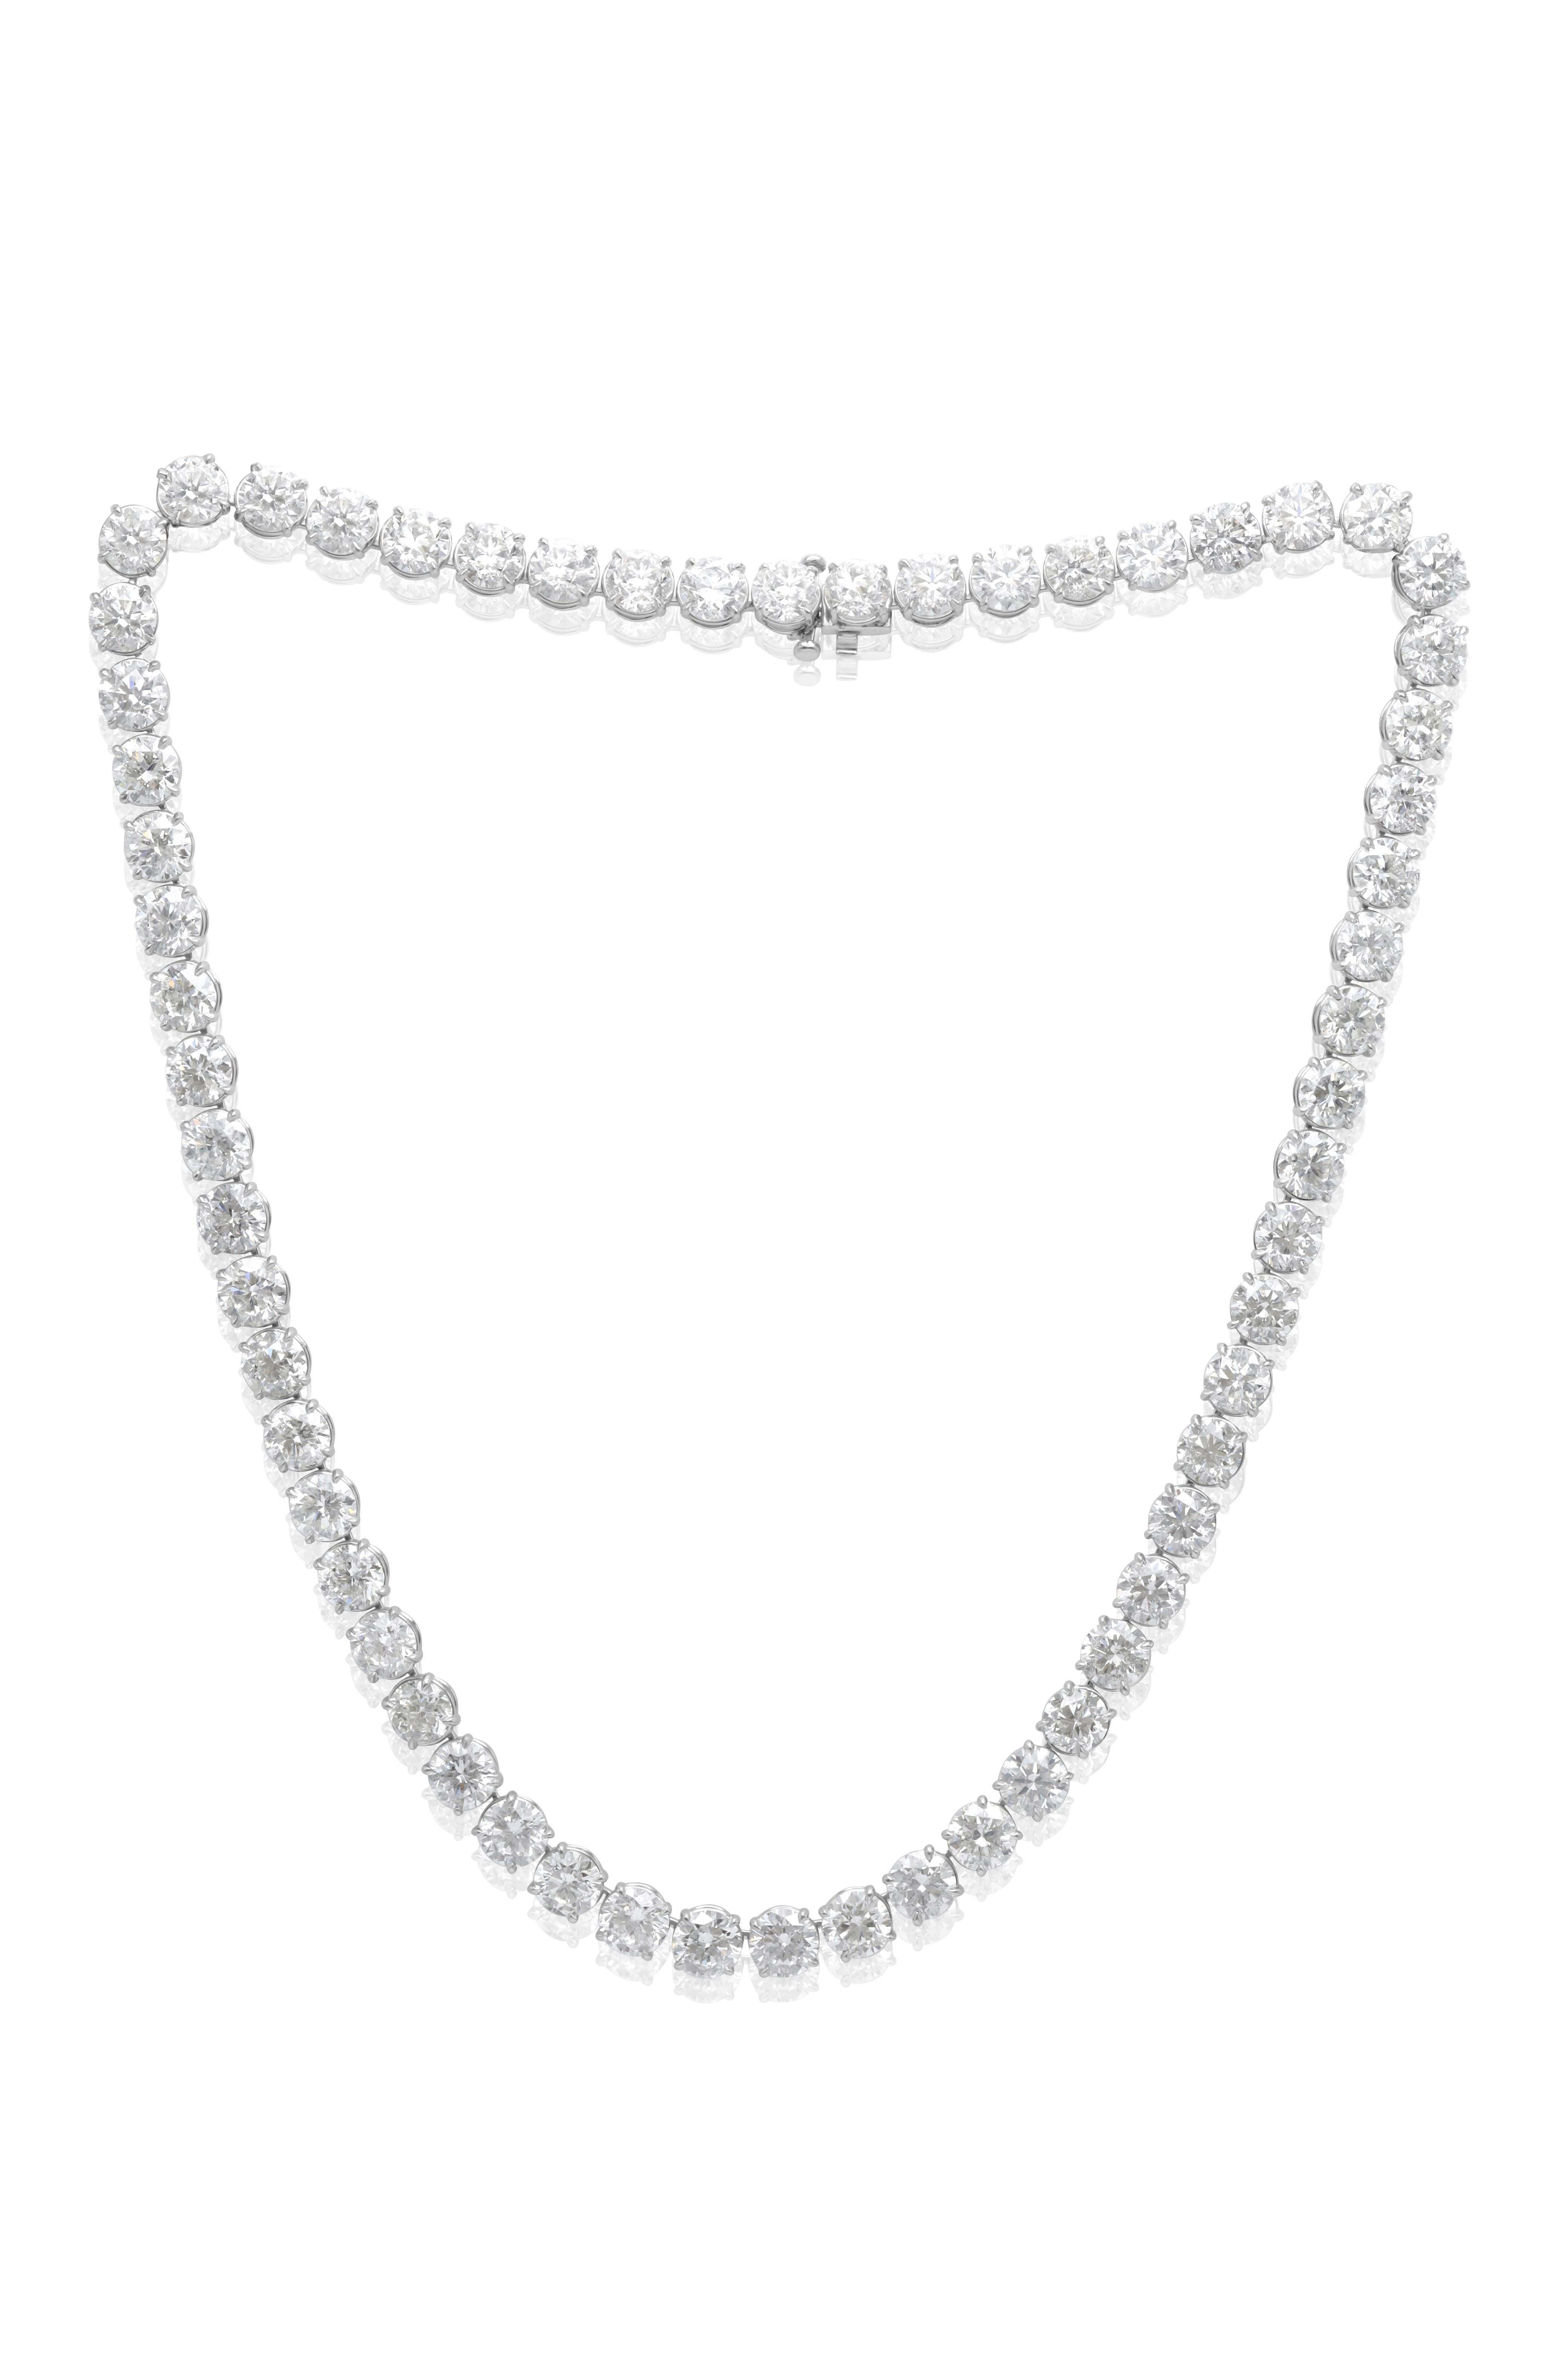 Custom 18 k white gold 4 prong diamond tennis necklace 37.65 cts brilliant cut round diamonds 79 stones 0.48 each FG color SI clarity. Excellent  cut. 